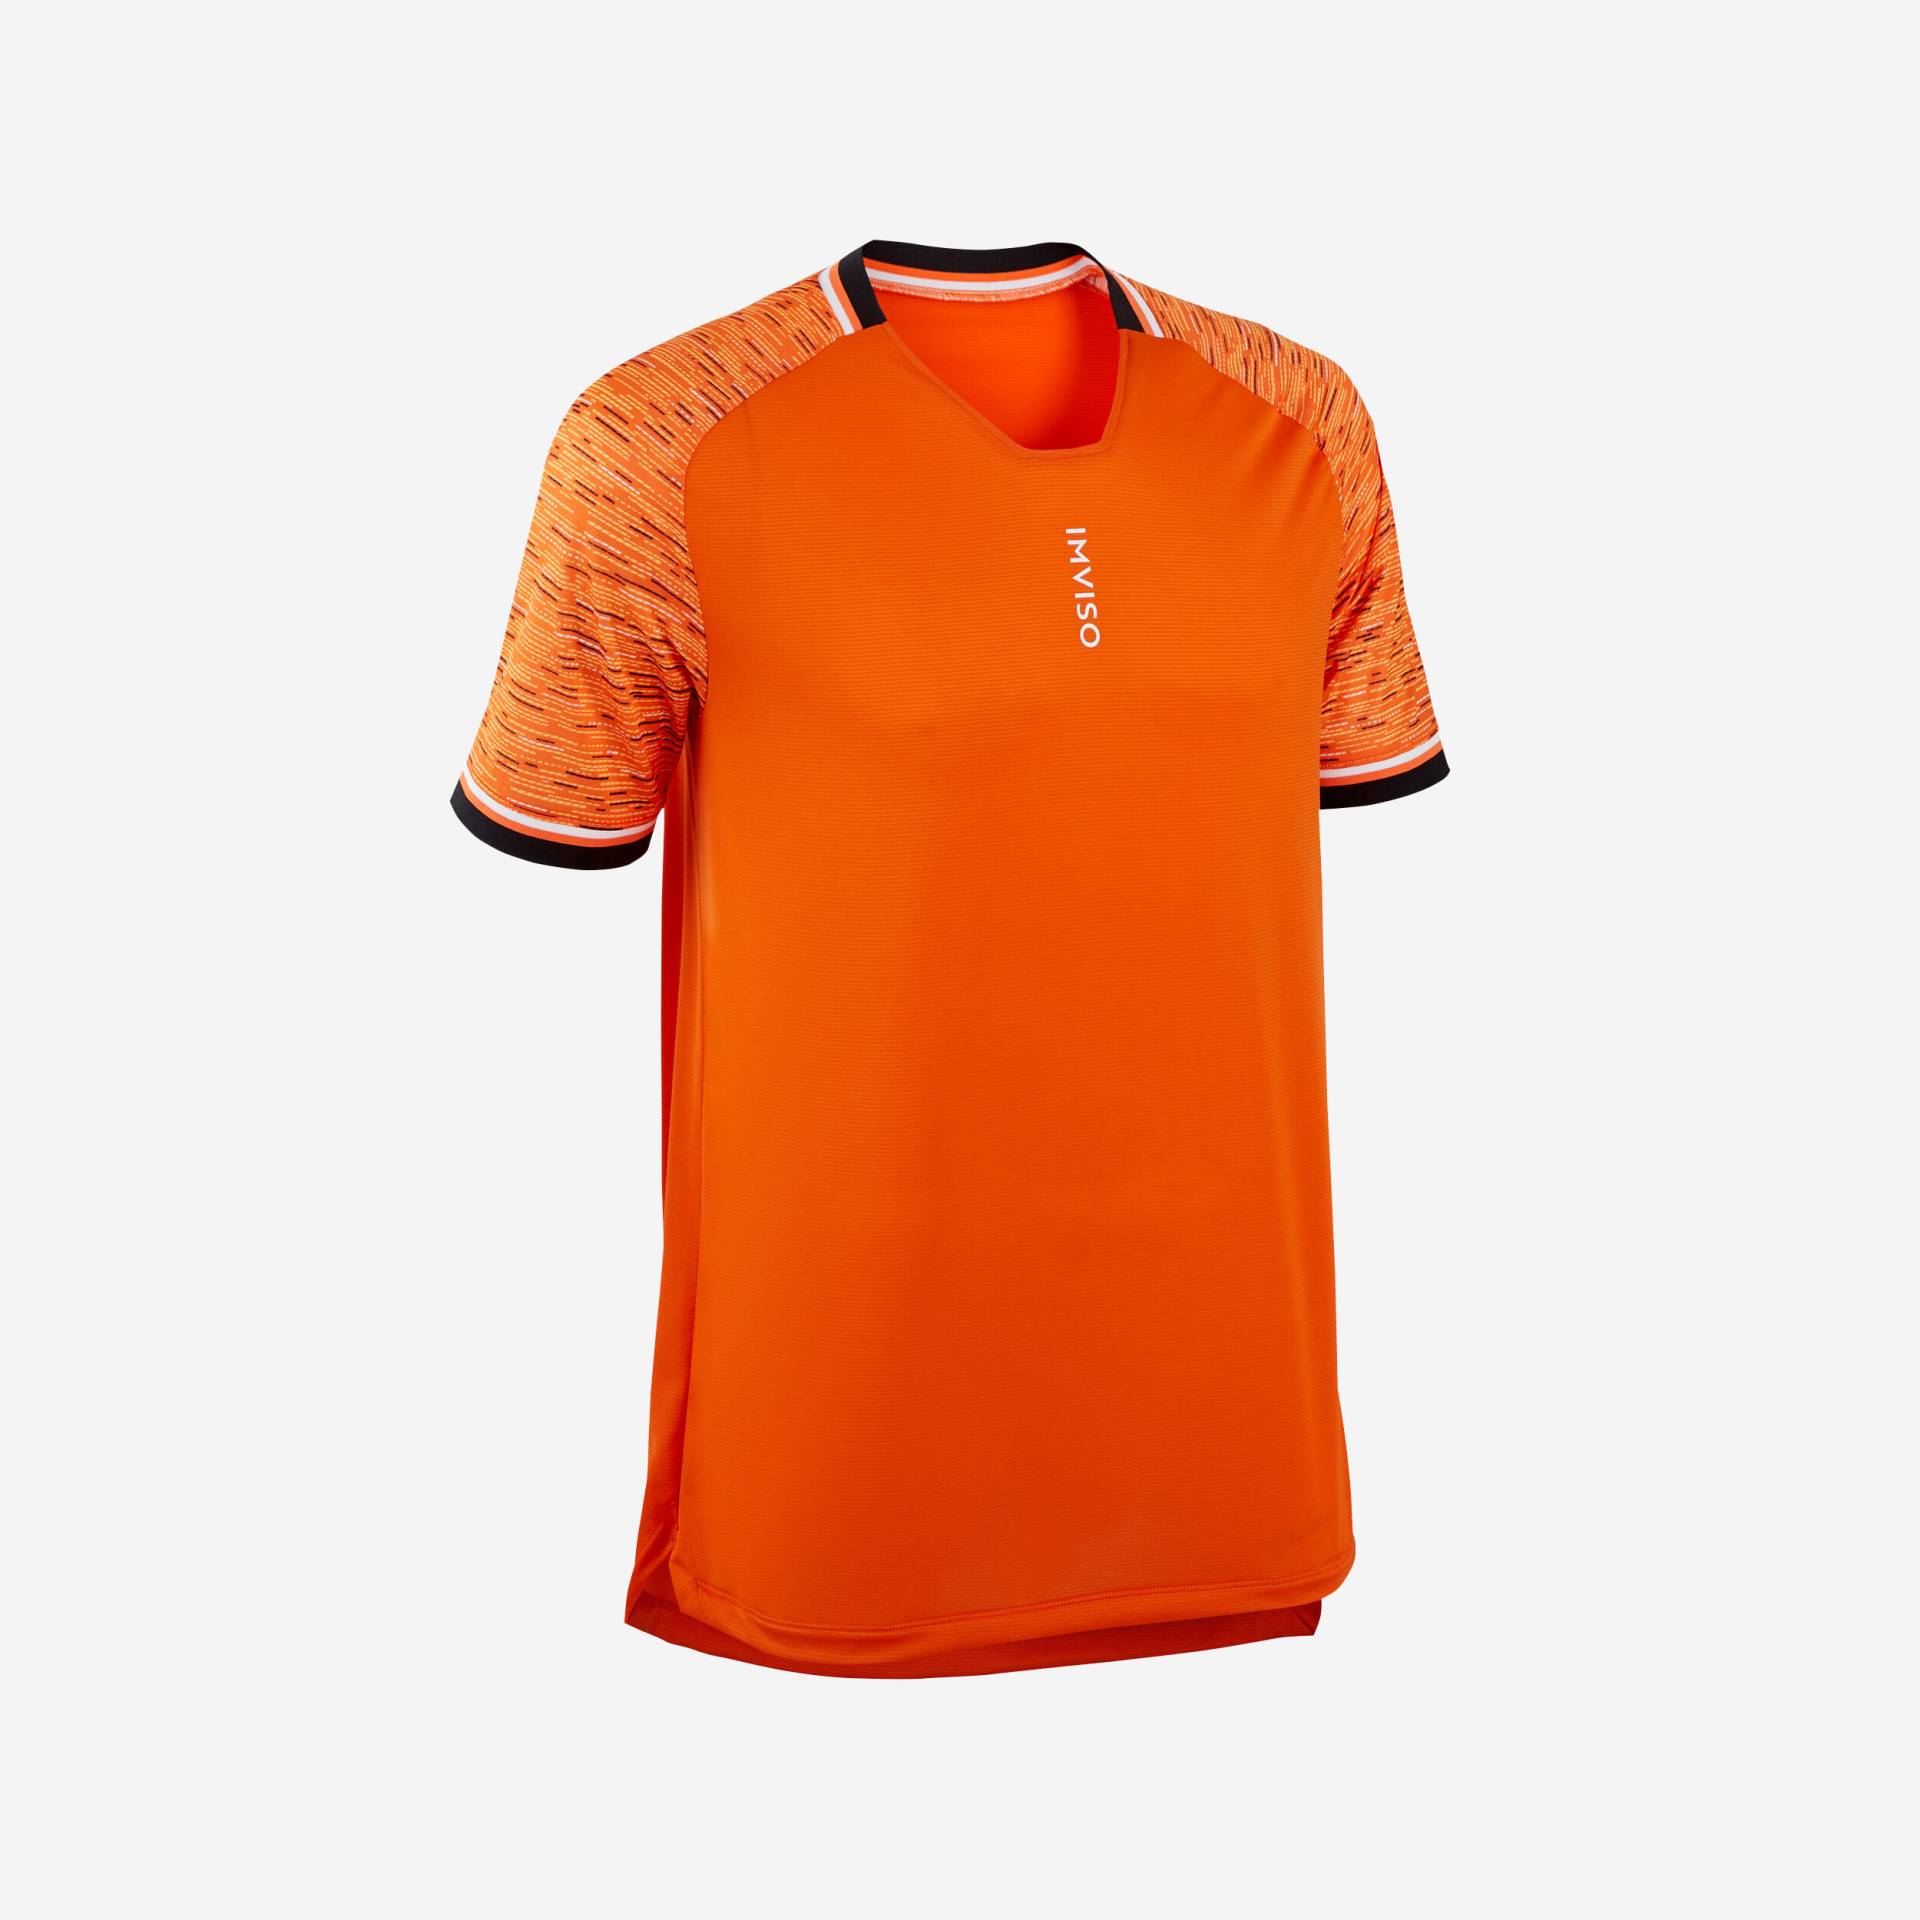 Trikot Futsal Herren orange von KIPSTA